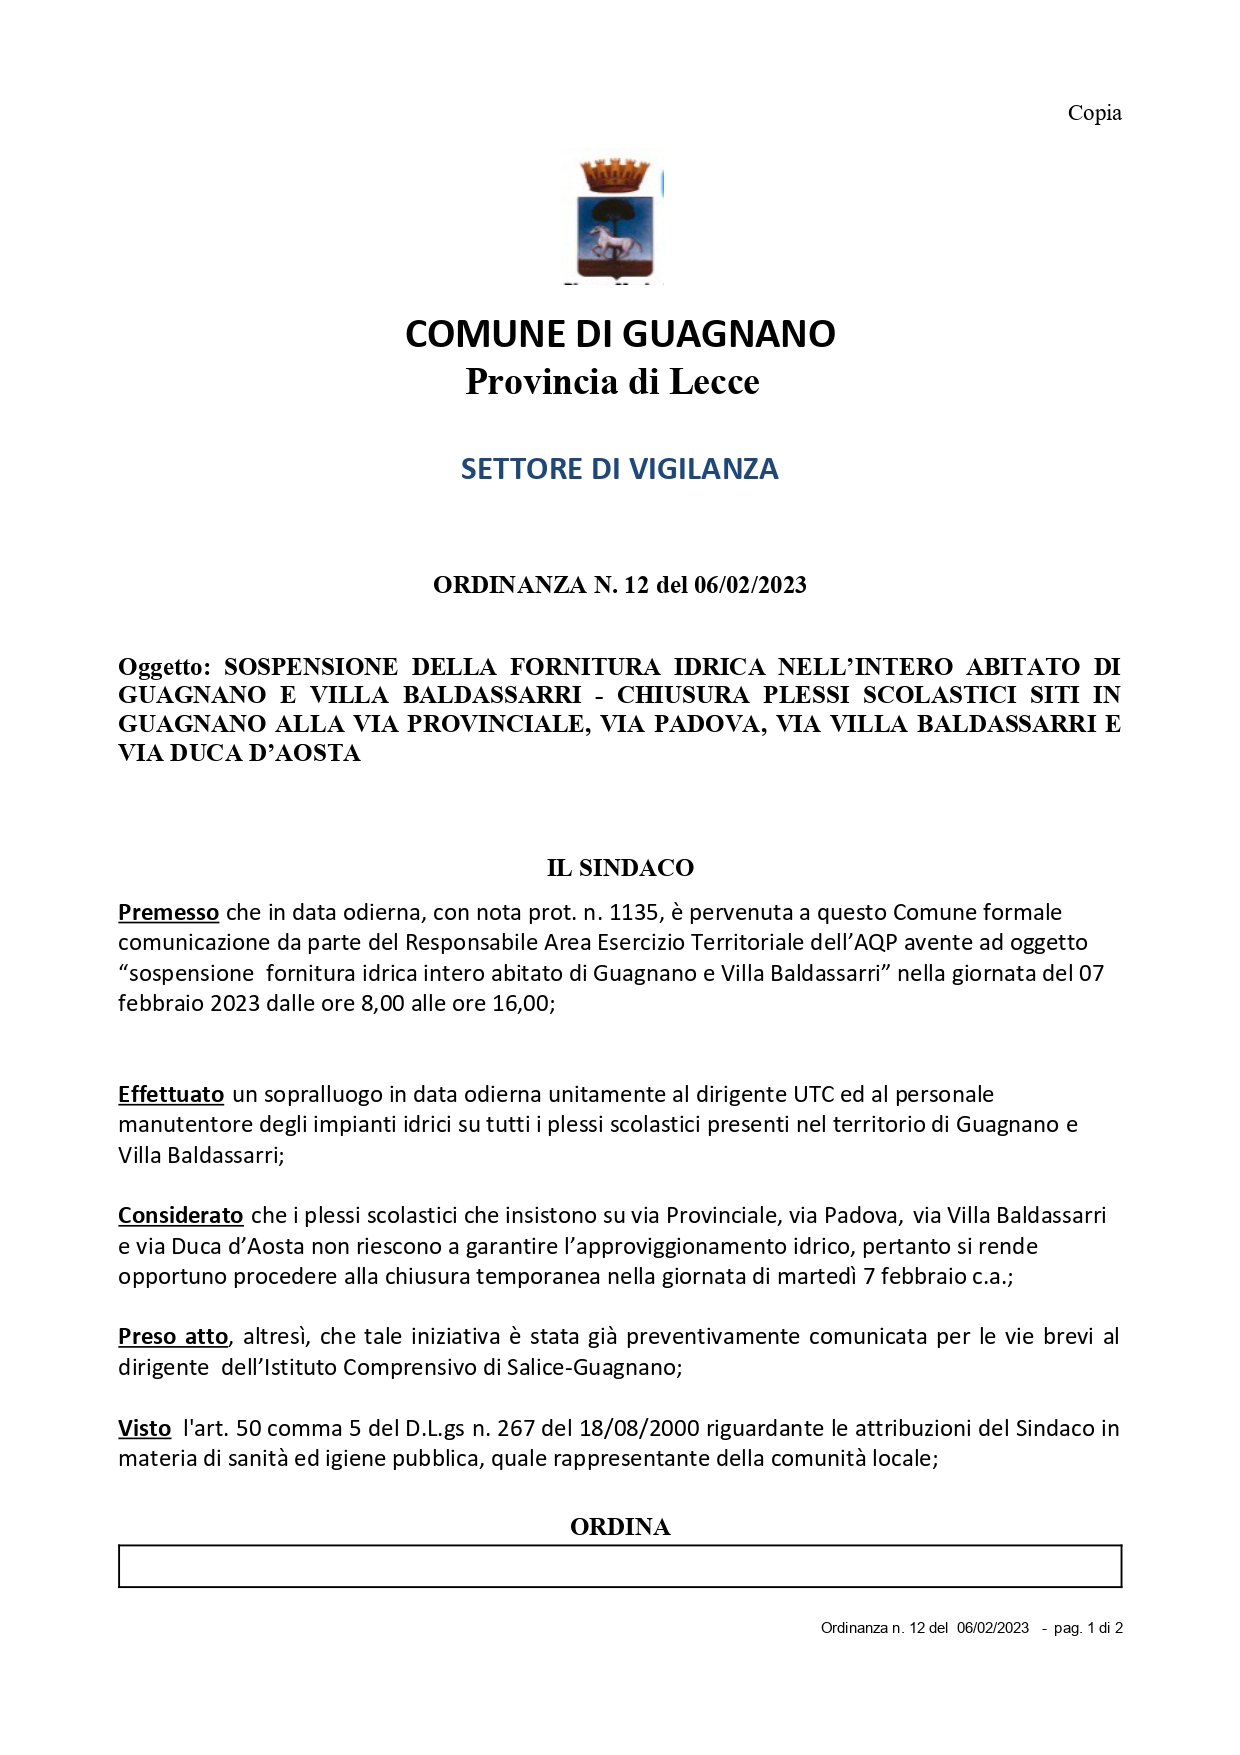 Ordinanza n. 12 page 0001